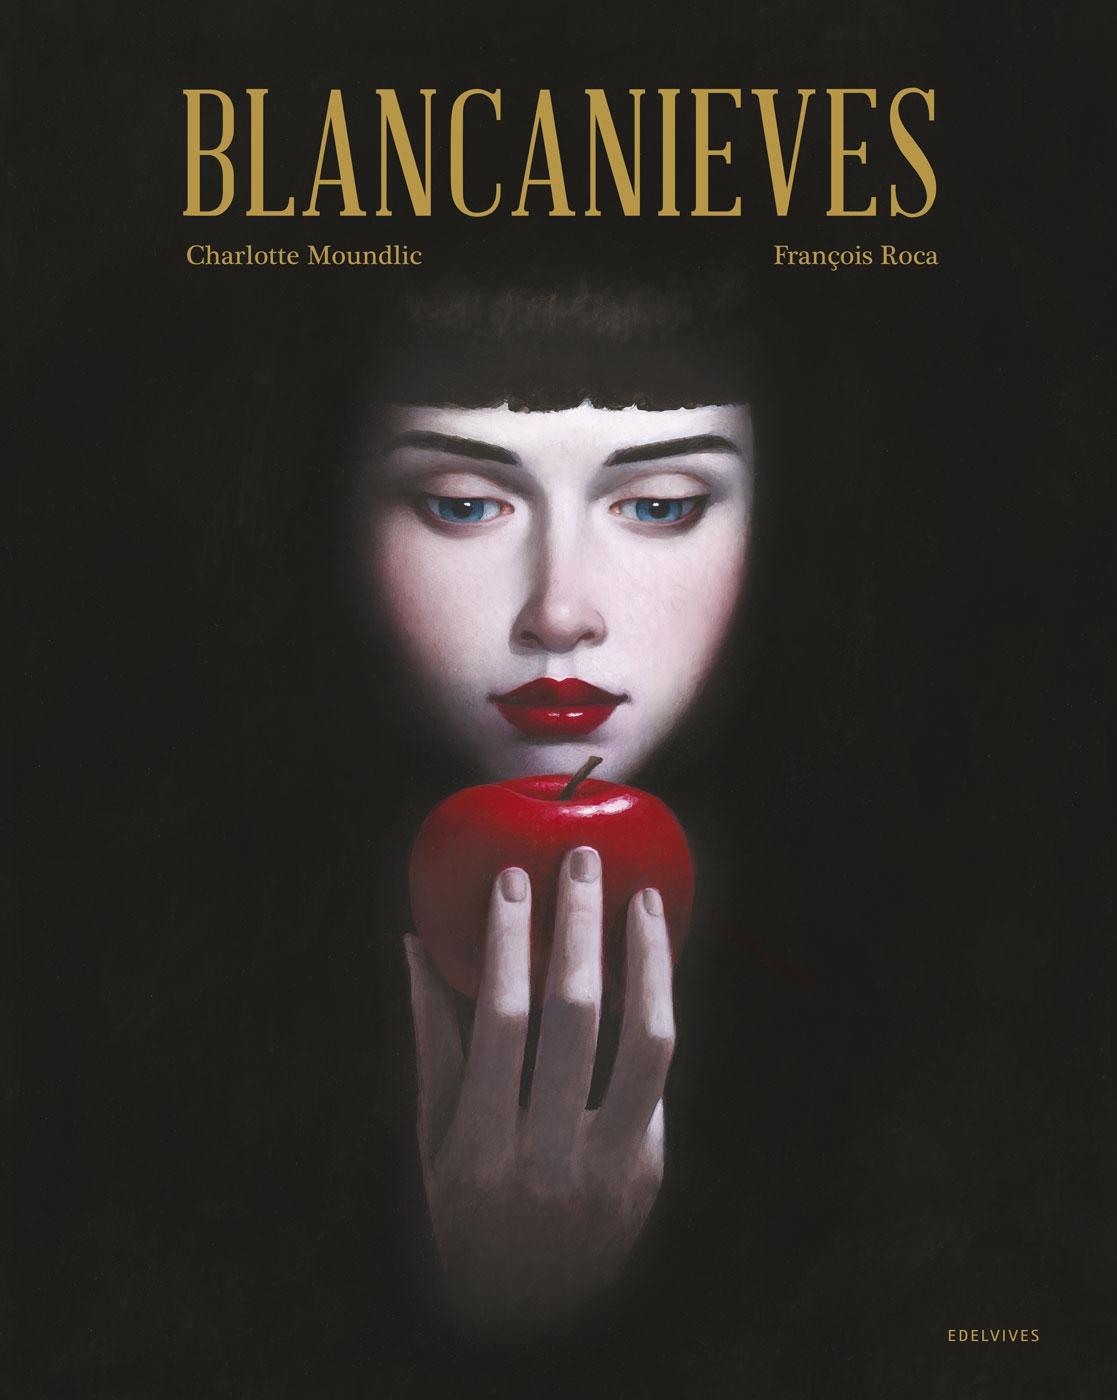 Blancanieves. 